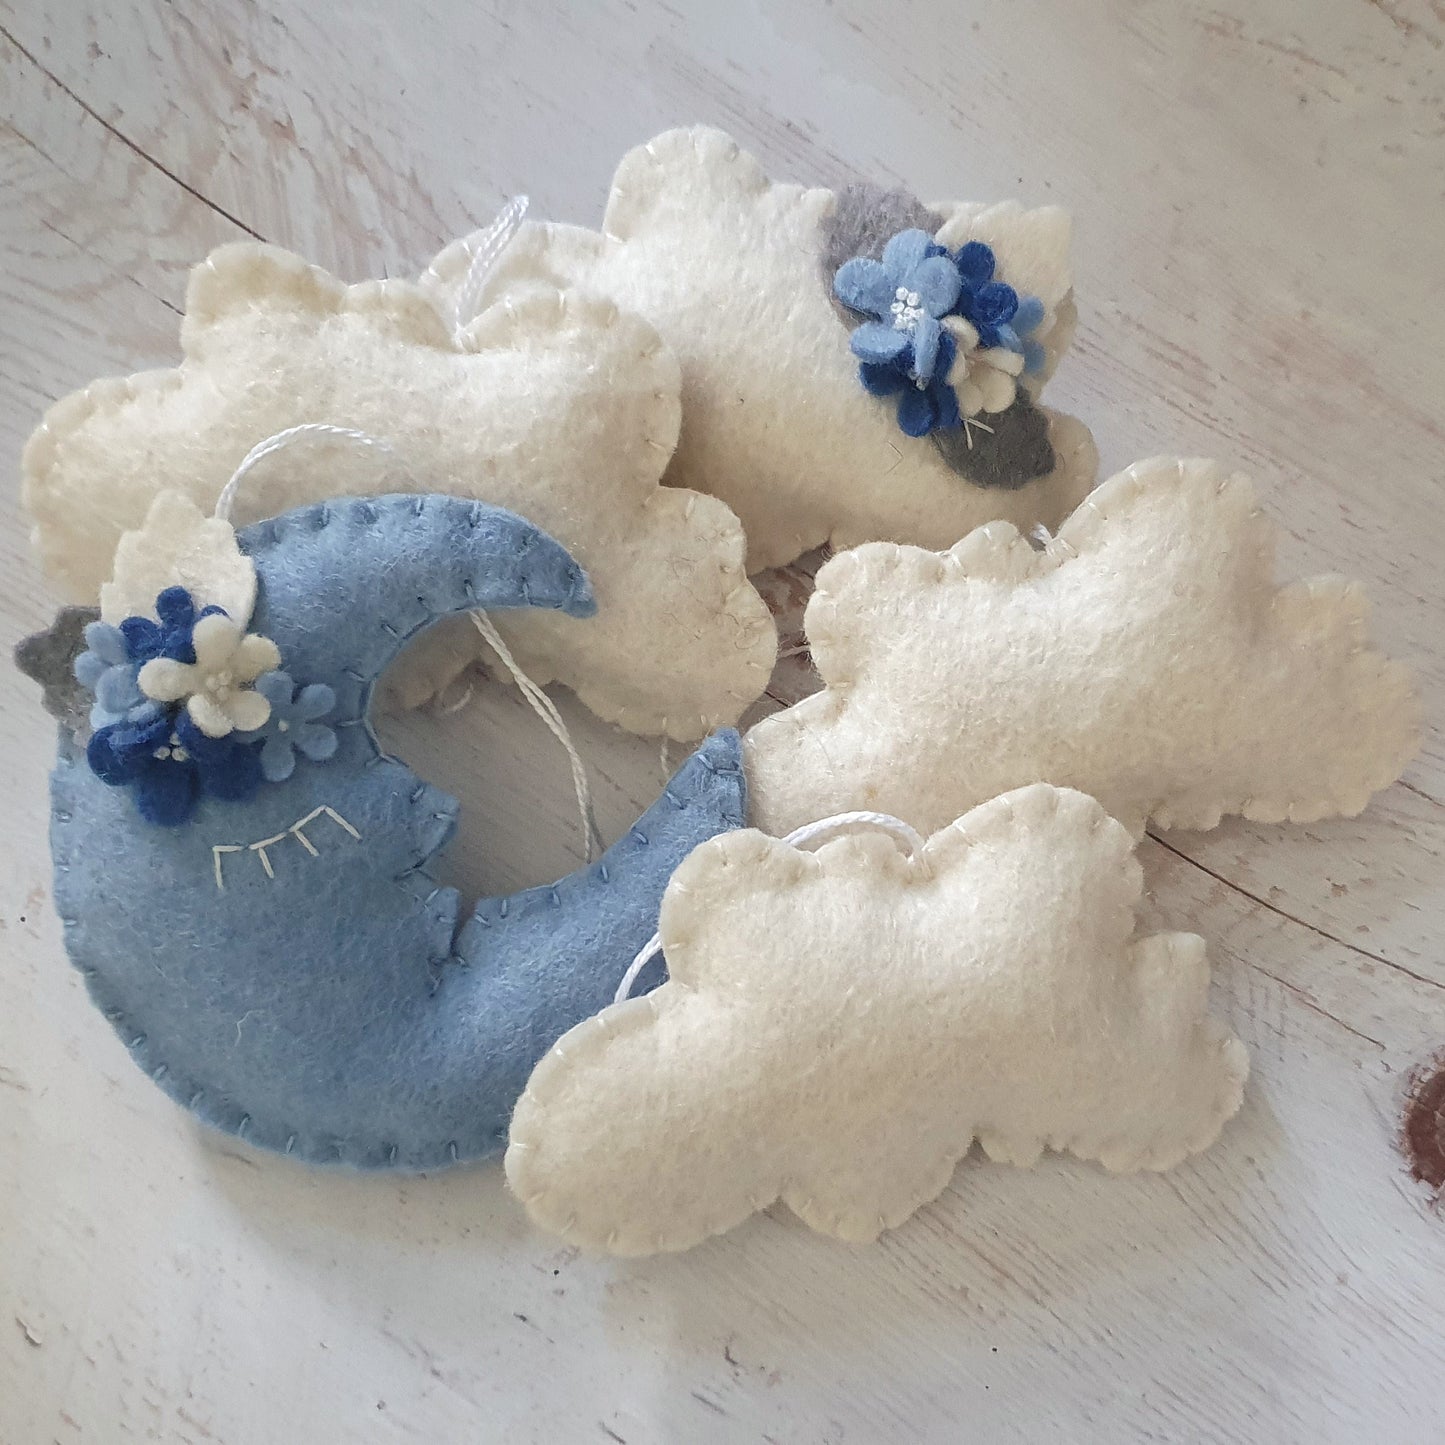 Cloud ornament with blue flowers - felt ornaments